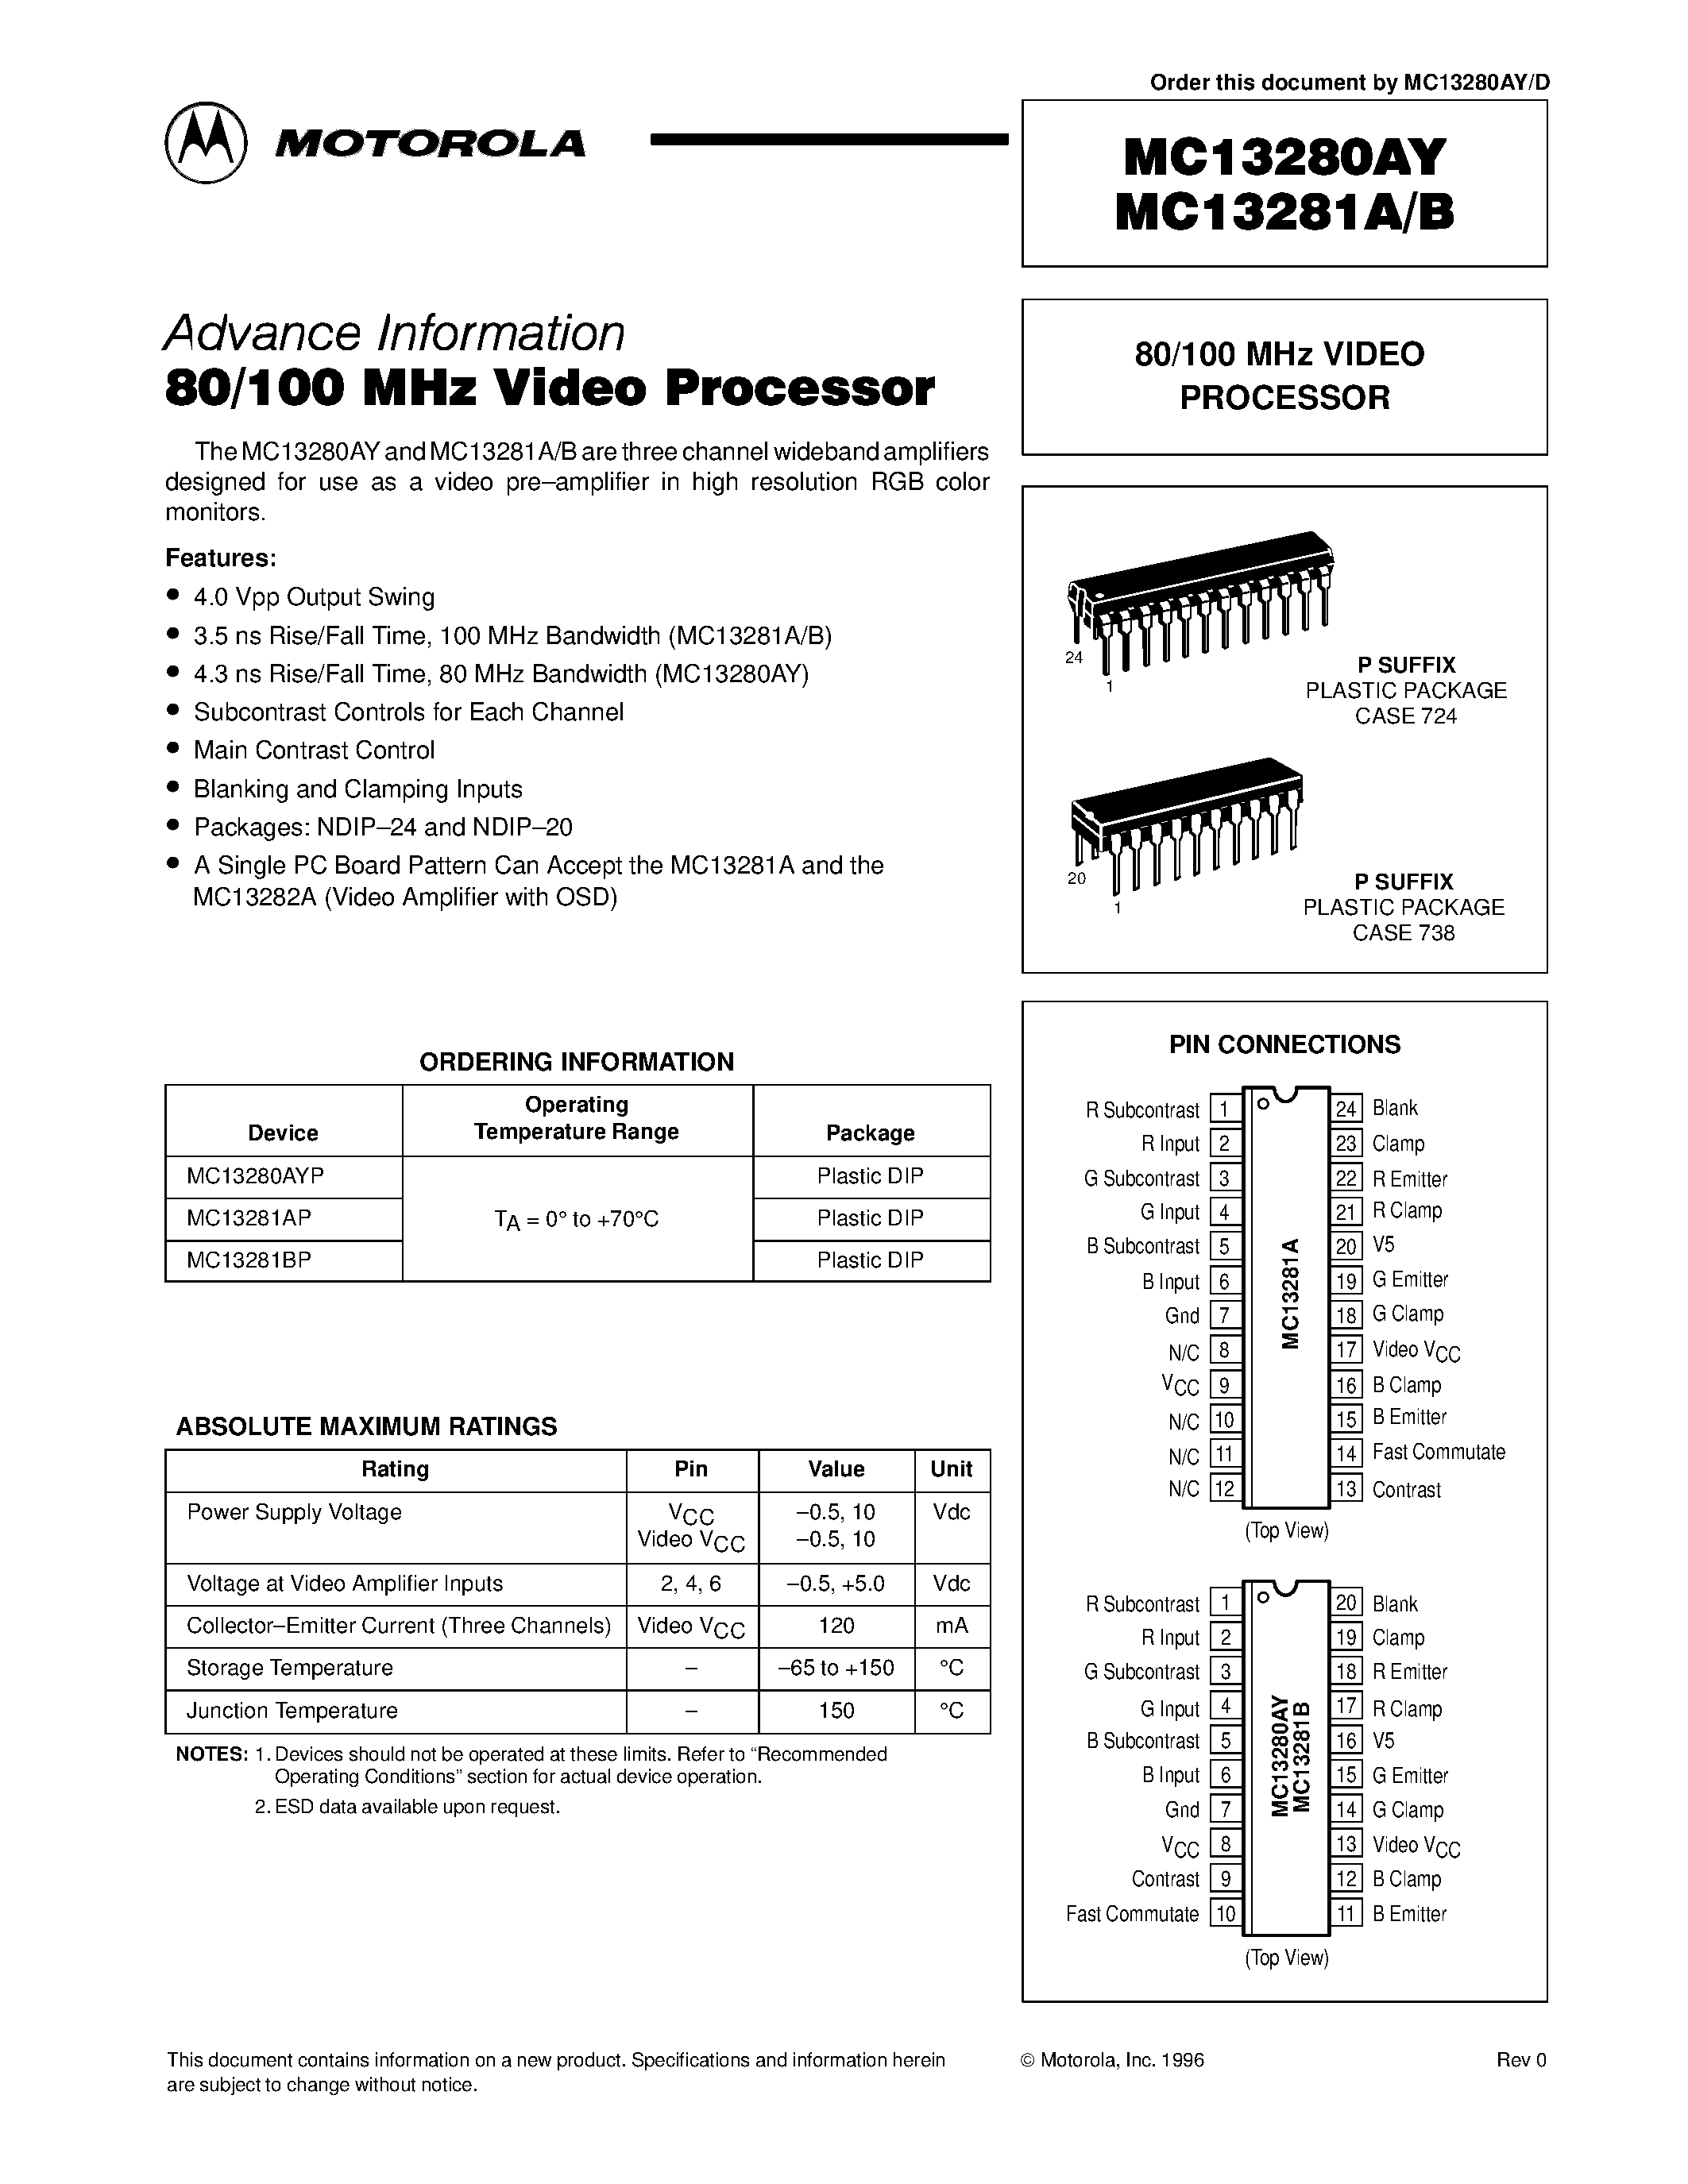 Datasheet MC13280AYP - 80/100 MHz VIDEO PROCESSOR page 1